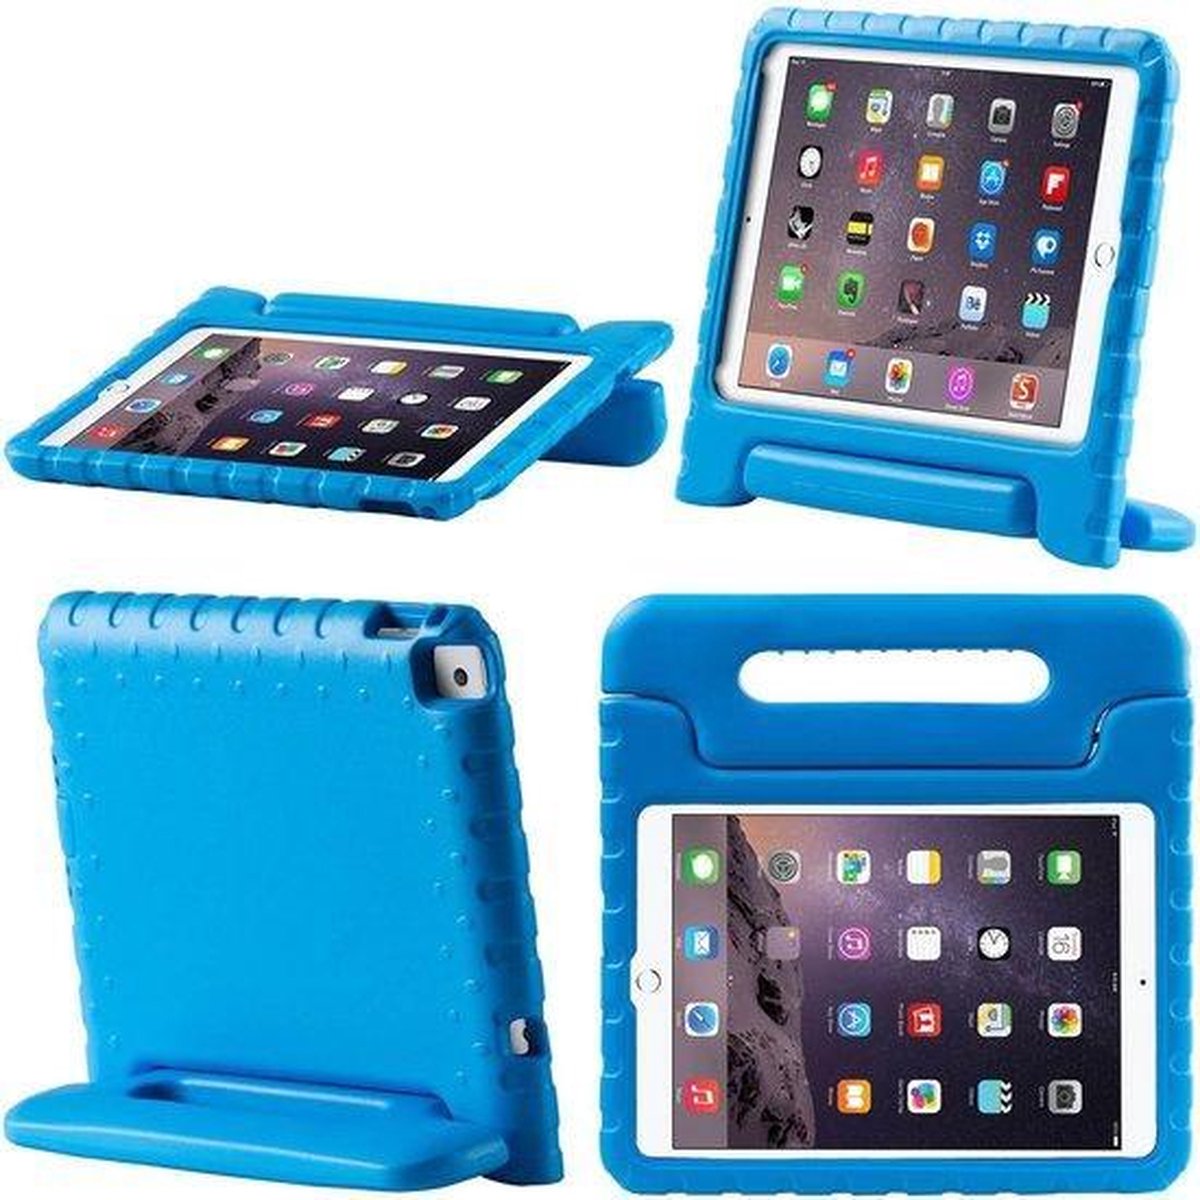 SMH Royal - iPad Air 1 hoes voor kinderen | Foam for Kids | Shockproof Case Hoesje / Cover / Hoes / Tablethoes/ Proof| Zeer sterk | Met Handige Handvat | Blauw